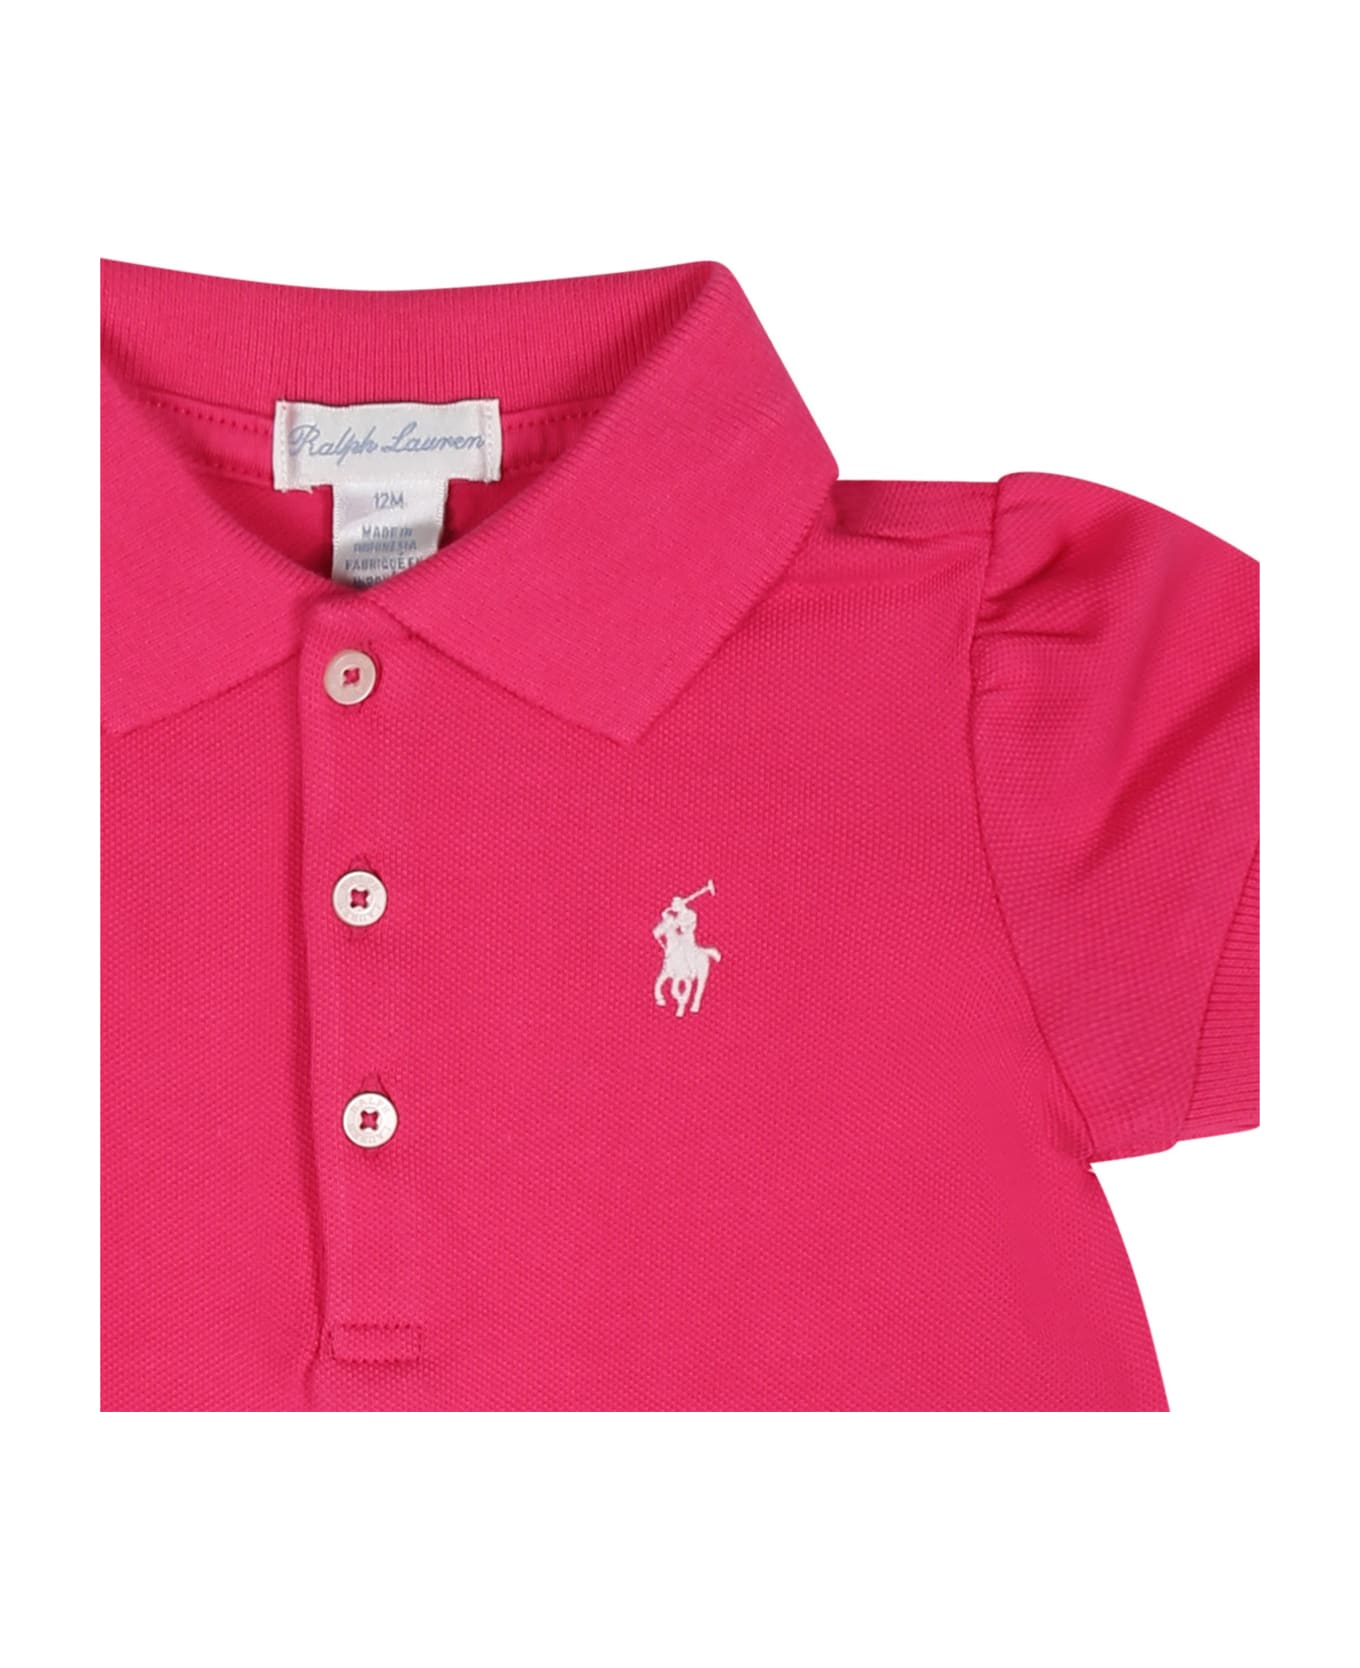 Ralph Lauren Fuchsia Dress Fro Baby Girl With Iconic Horse - Fuchsia